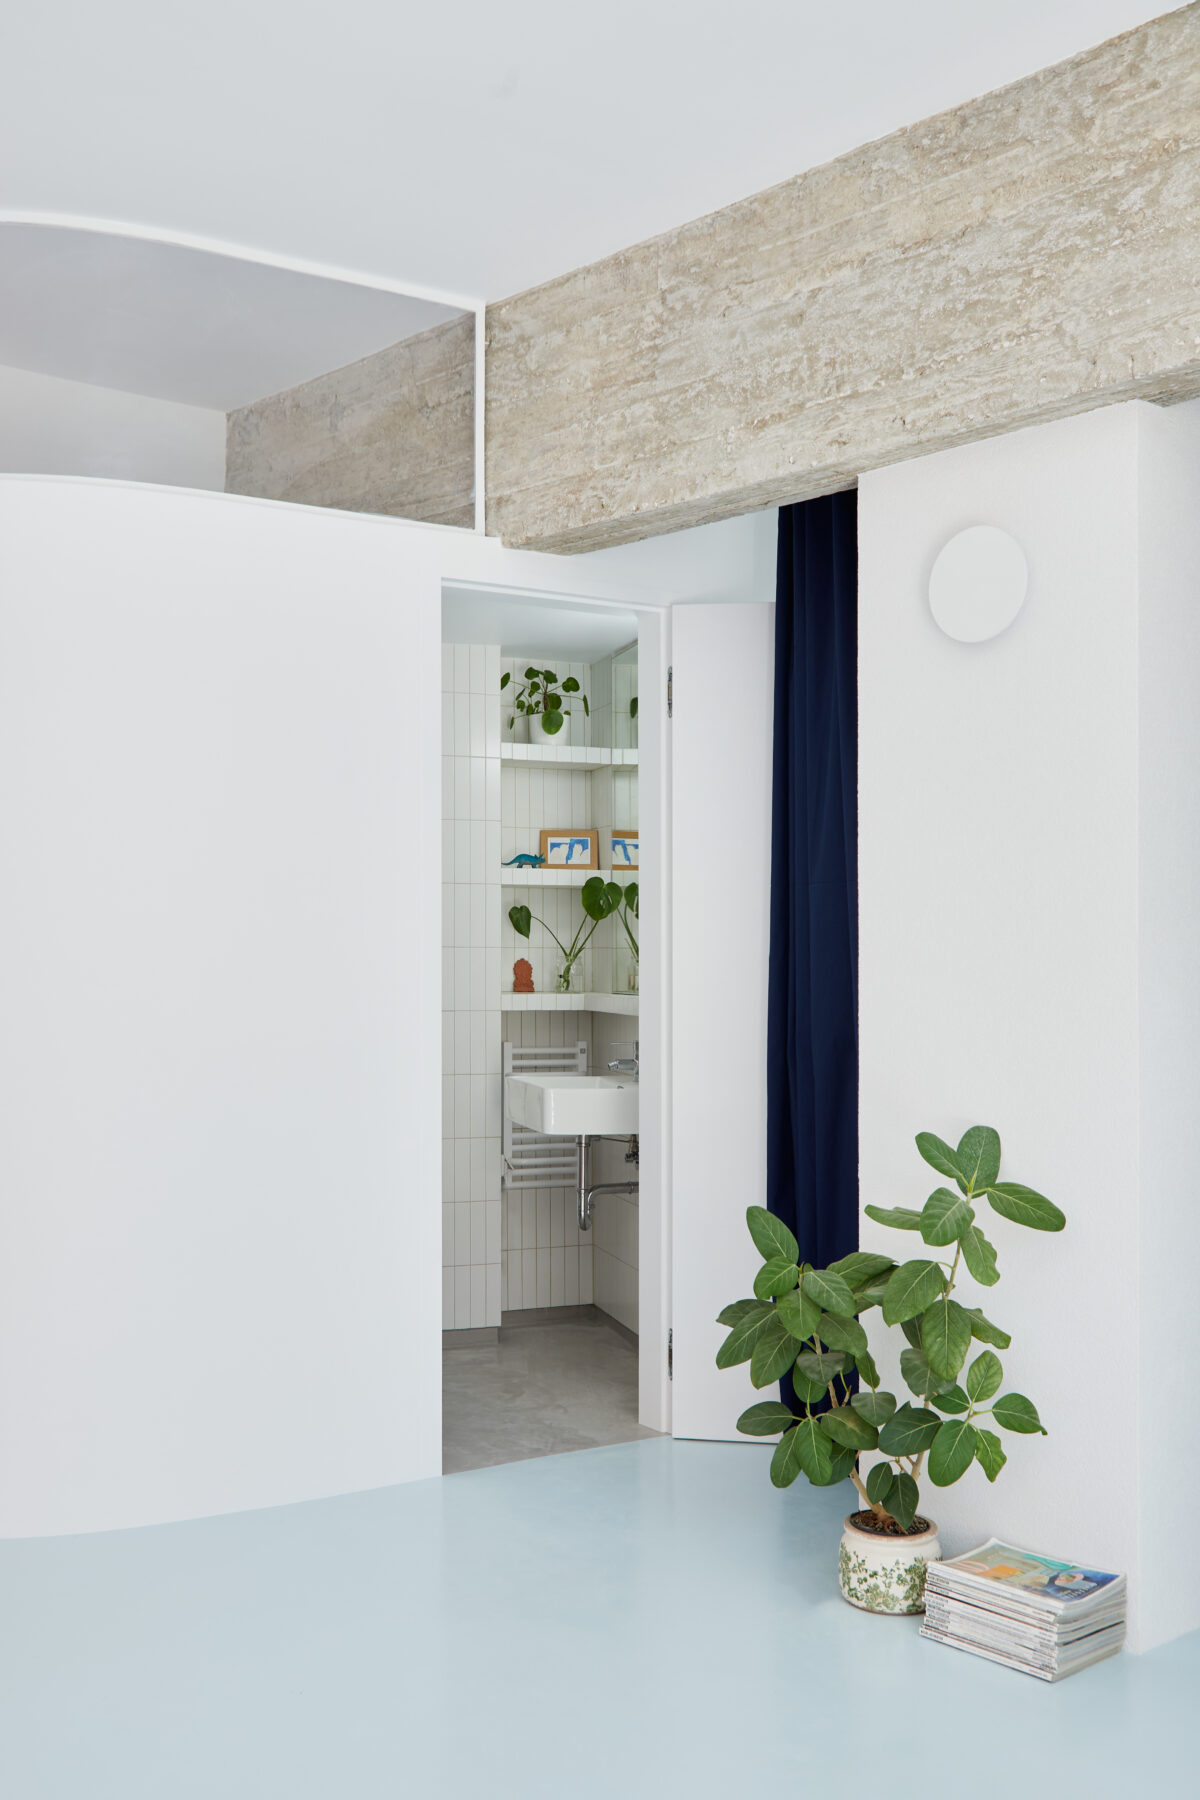 Archisearch Architect Federica Scalise renovated Paraschou apartment studio in Gyzi, Athens